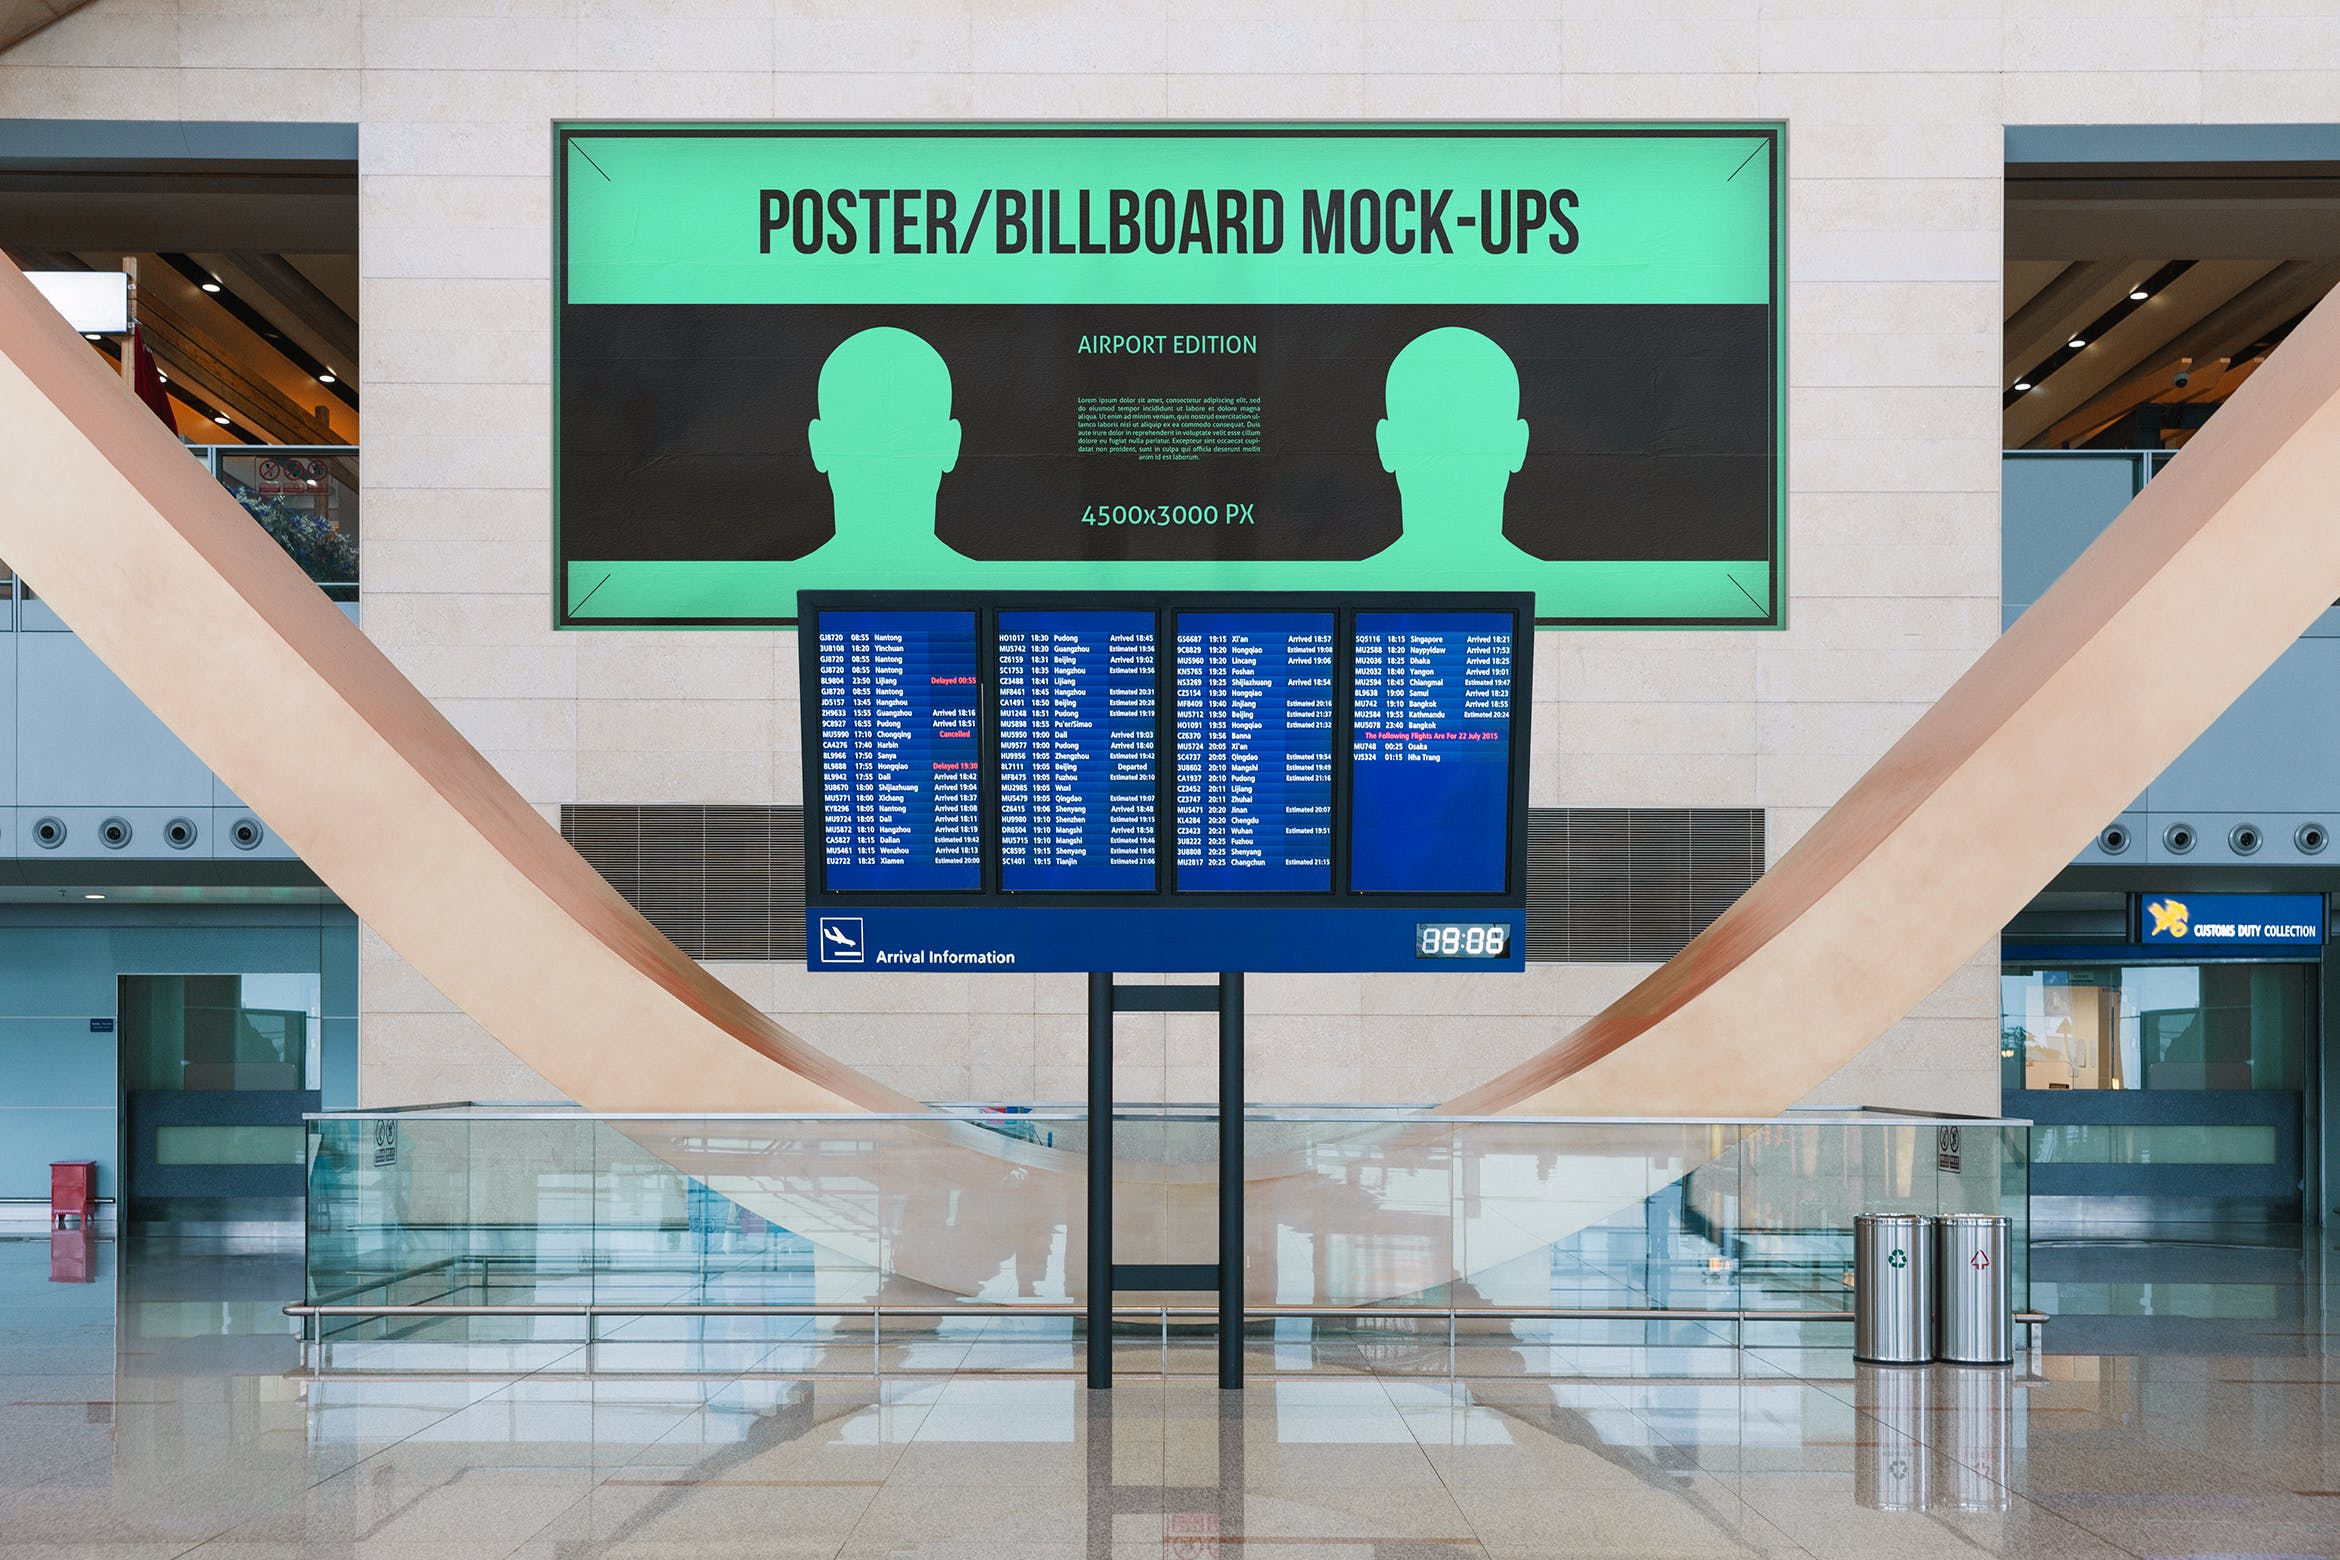 机场航班信息屏幕海报/广告牌样机16设计网精选模板#7 Poster / Billboard Mock-ups – Airport Edition #7插图